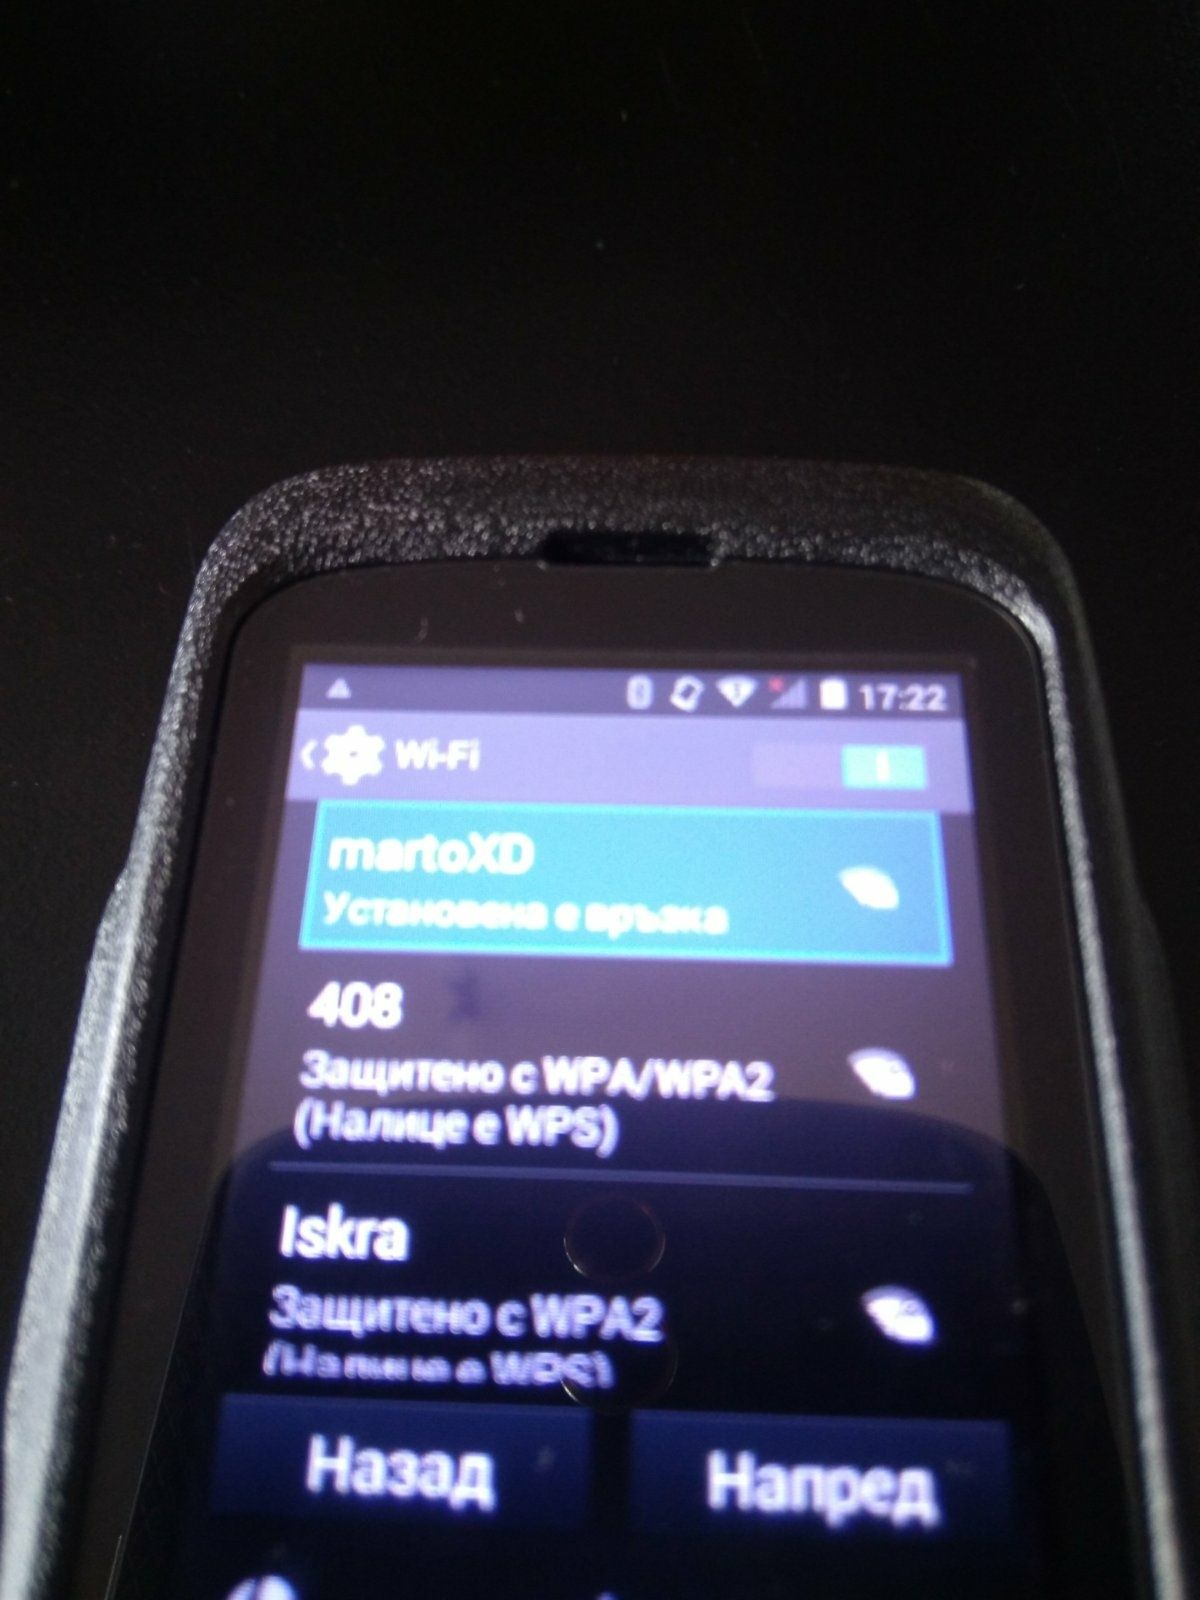 Нов H650 6600mAh, Андроид, ip68, удароустойчив телефон с копчета